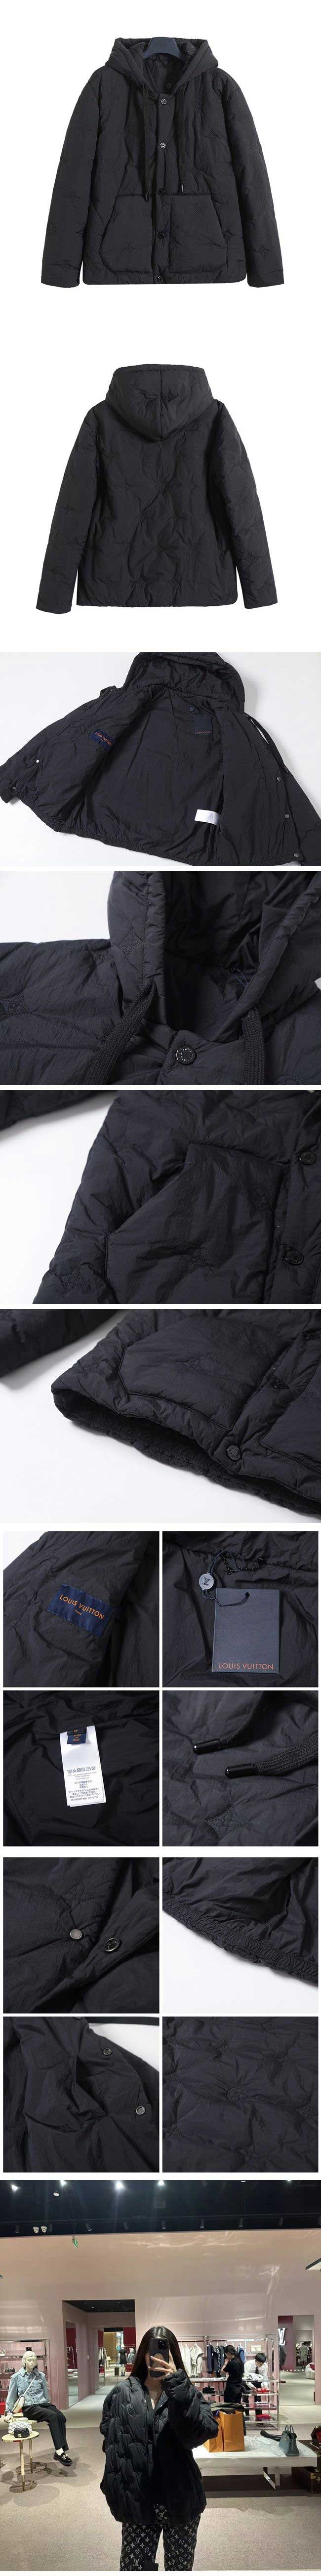 Louis Vuitton Monogram Puffer Jacket ルイヴィトン モノグラム パファー ジャケット